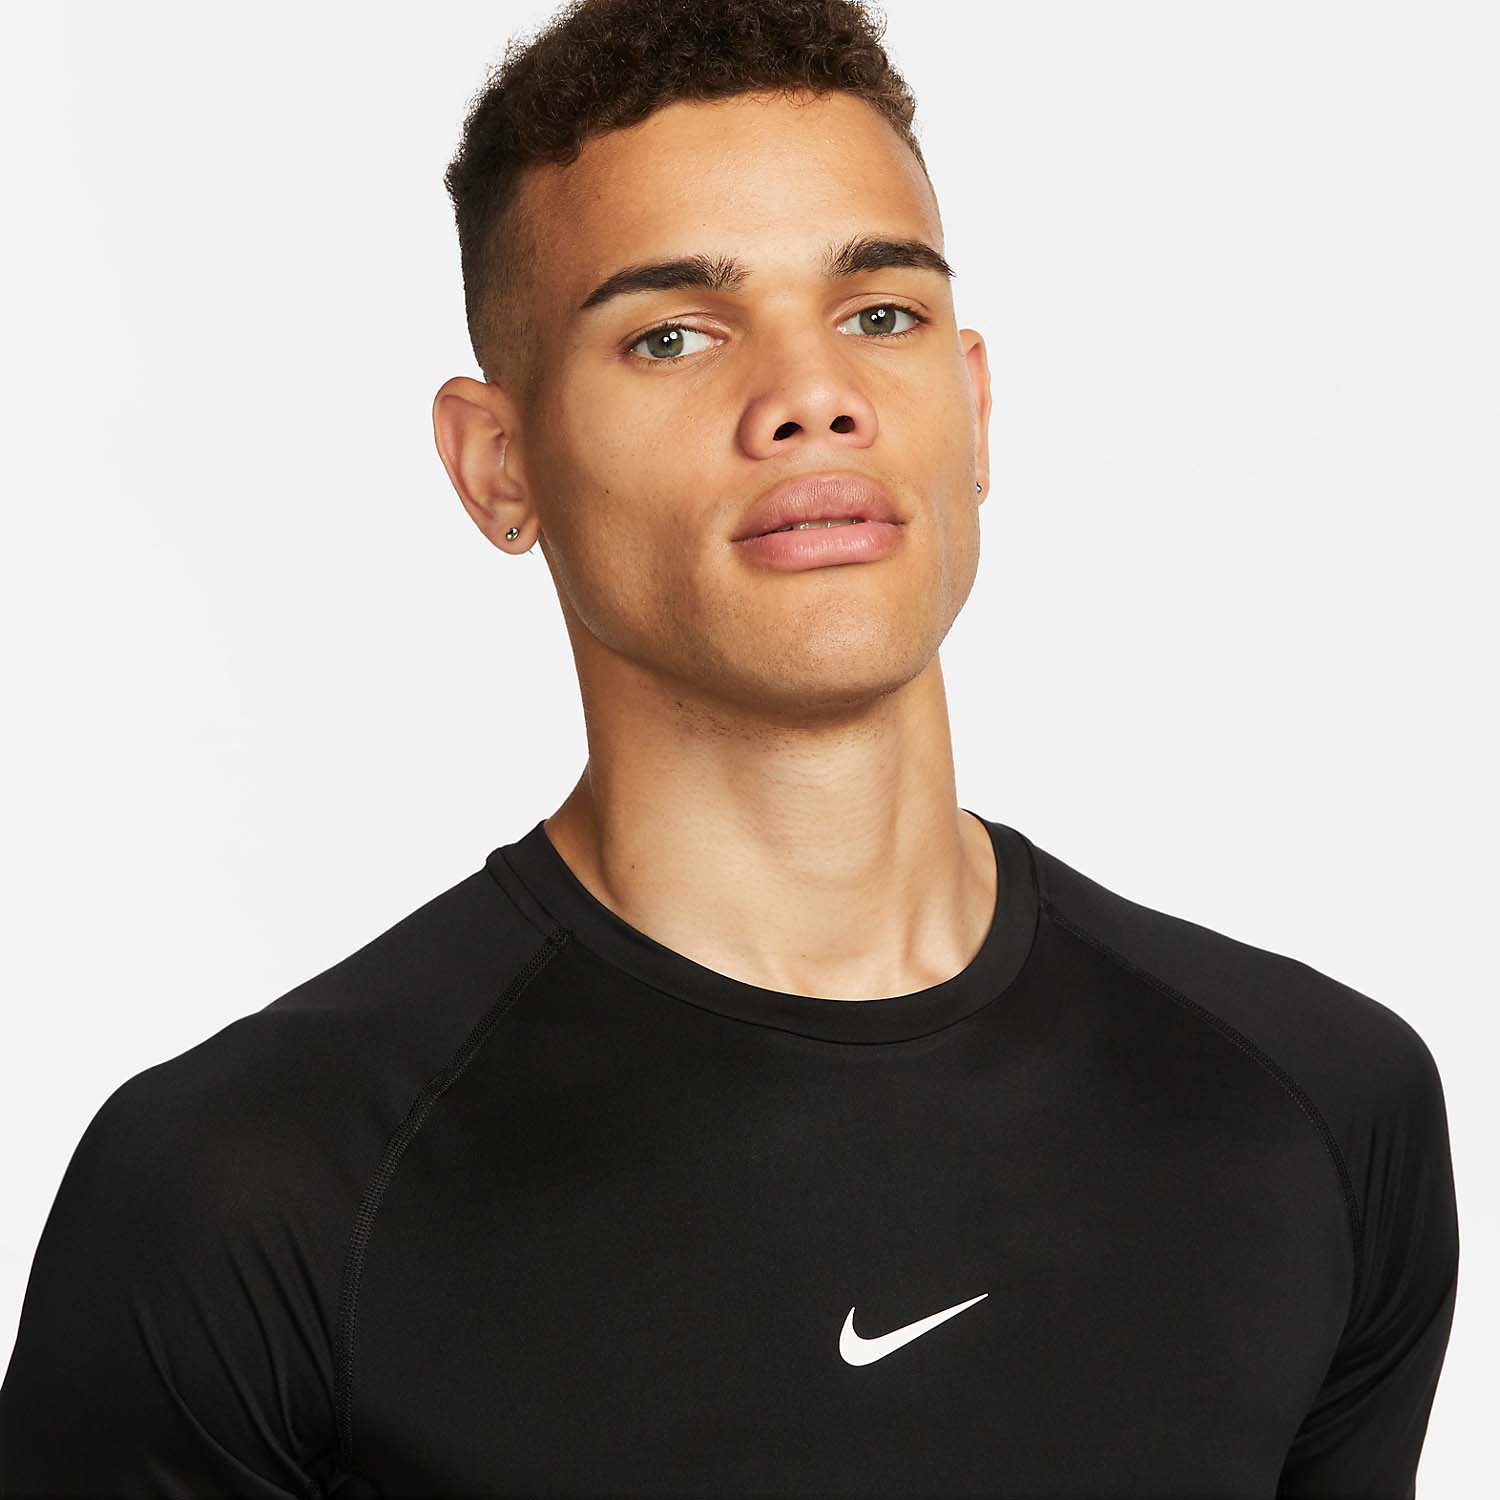 Nike Pro Camiseta - Black/White